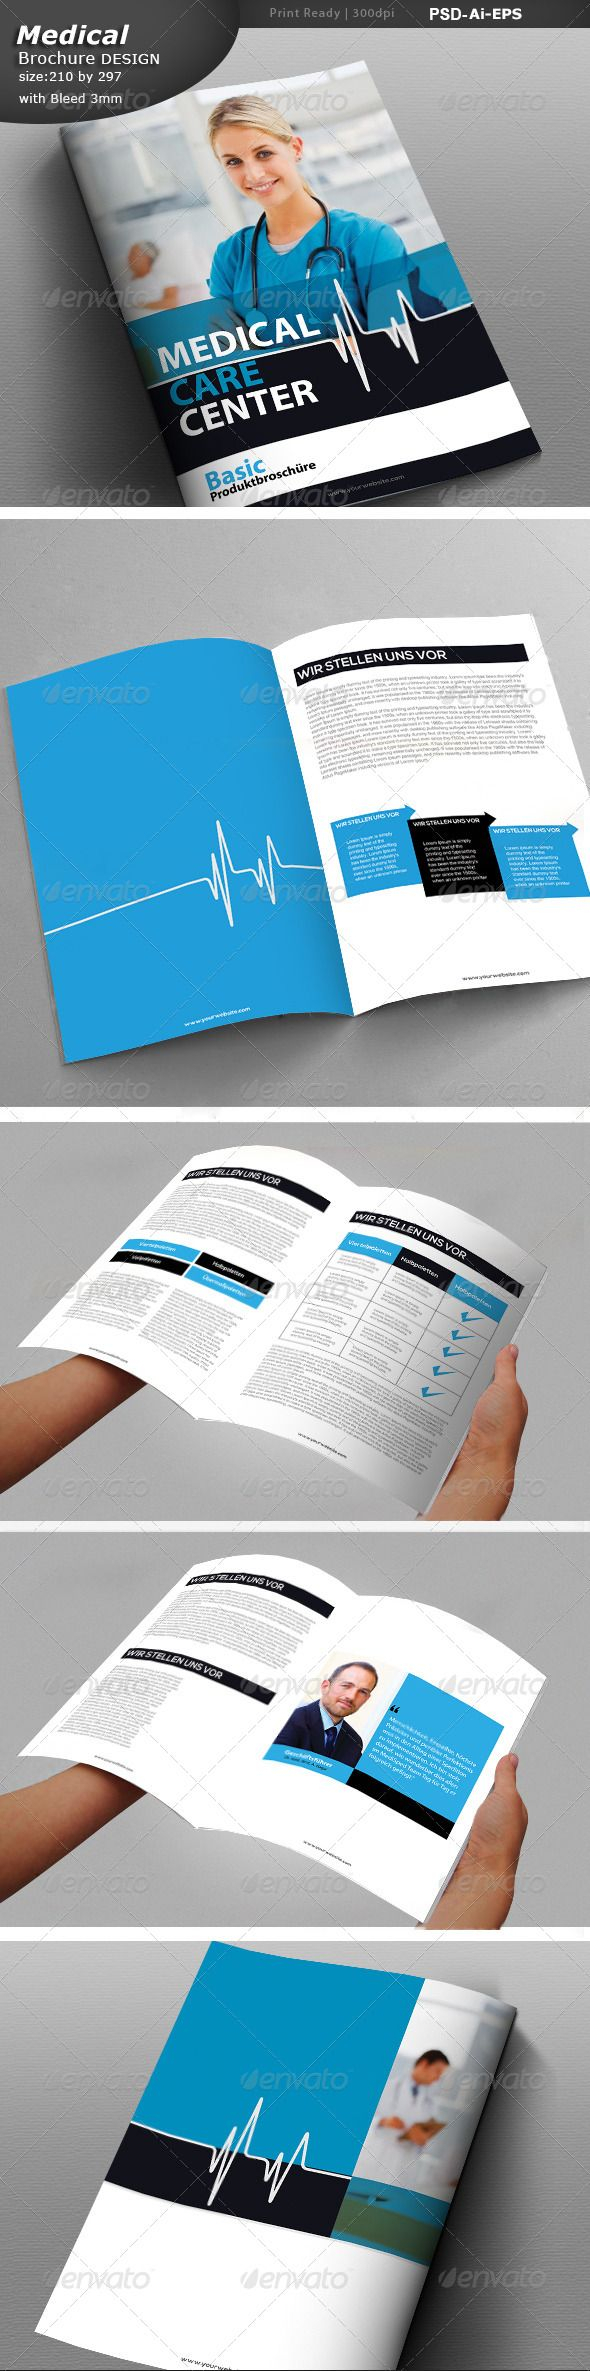 Medical Center Brochure Design – Print Templates | Ads For Medical Office Brochure Templates